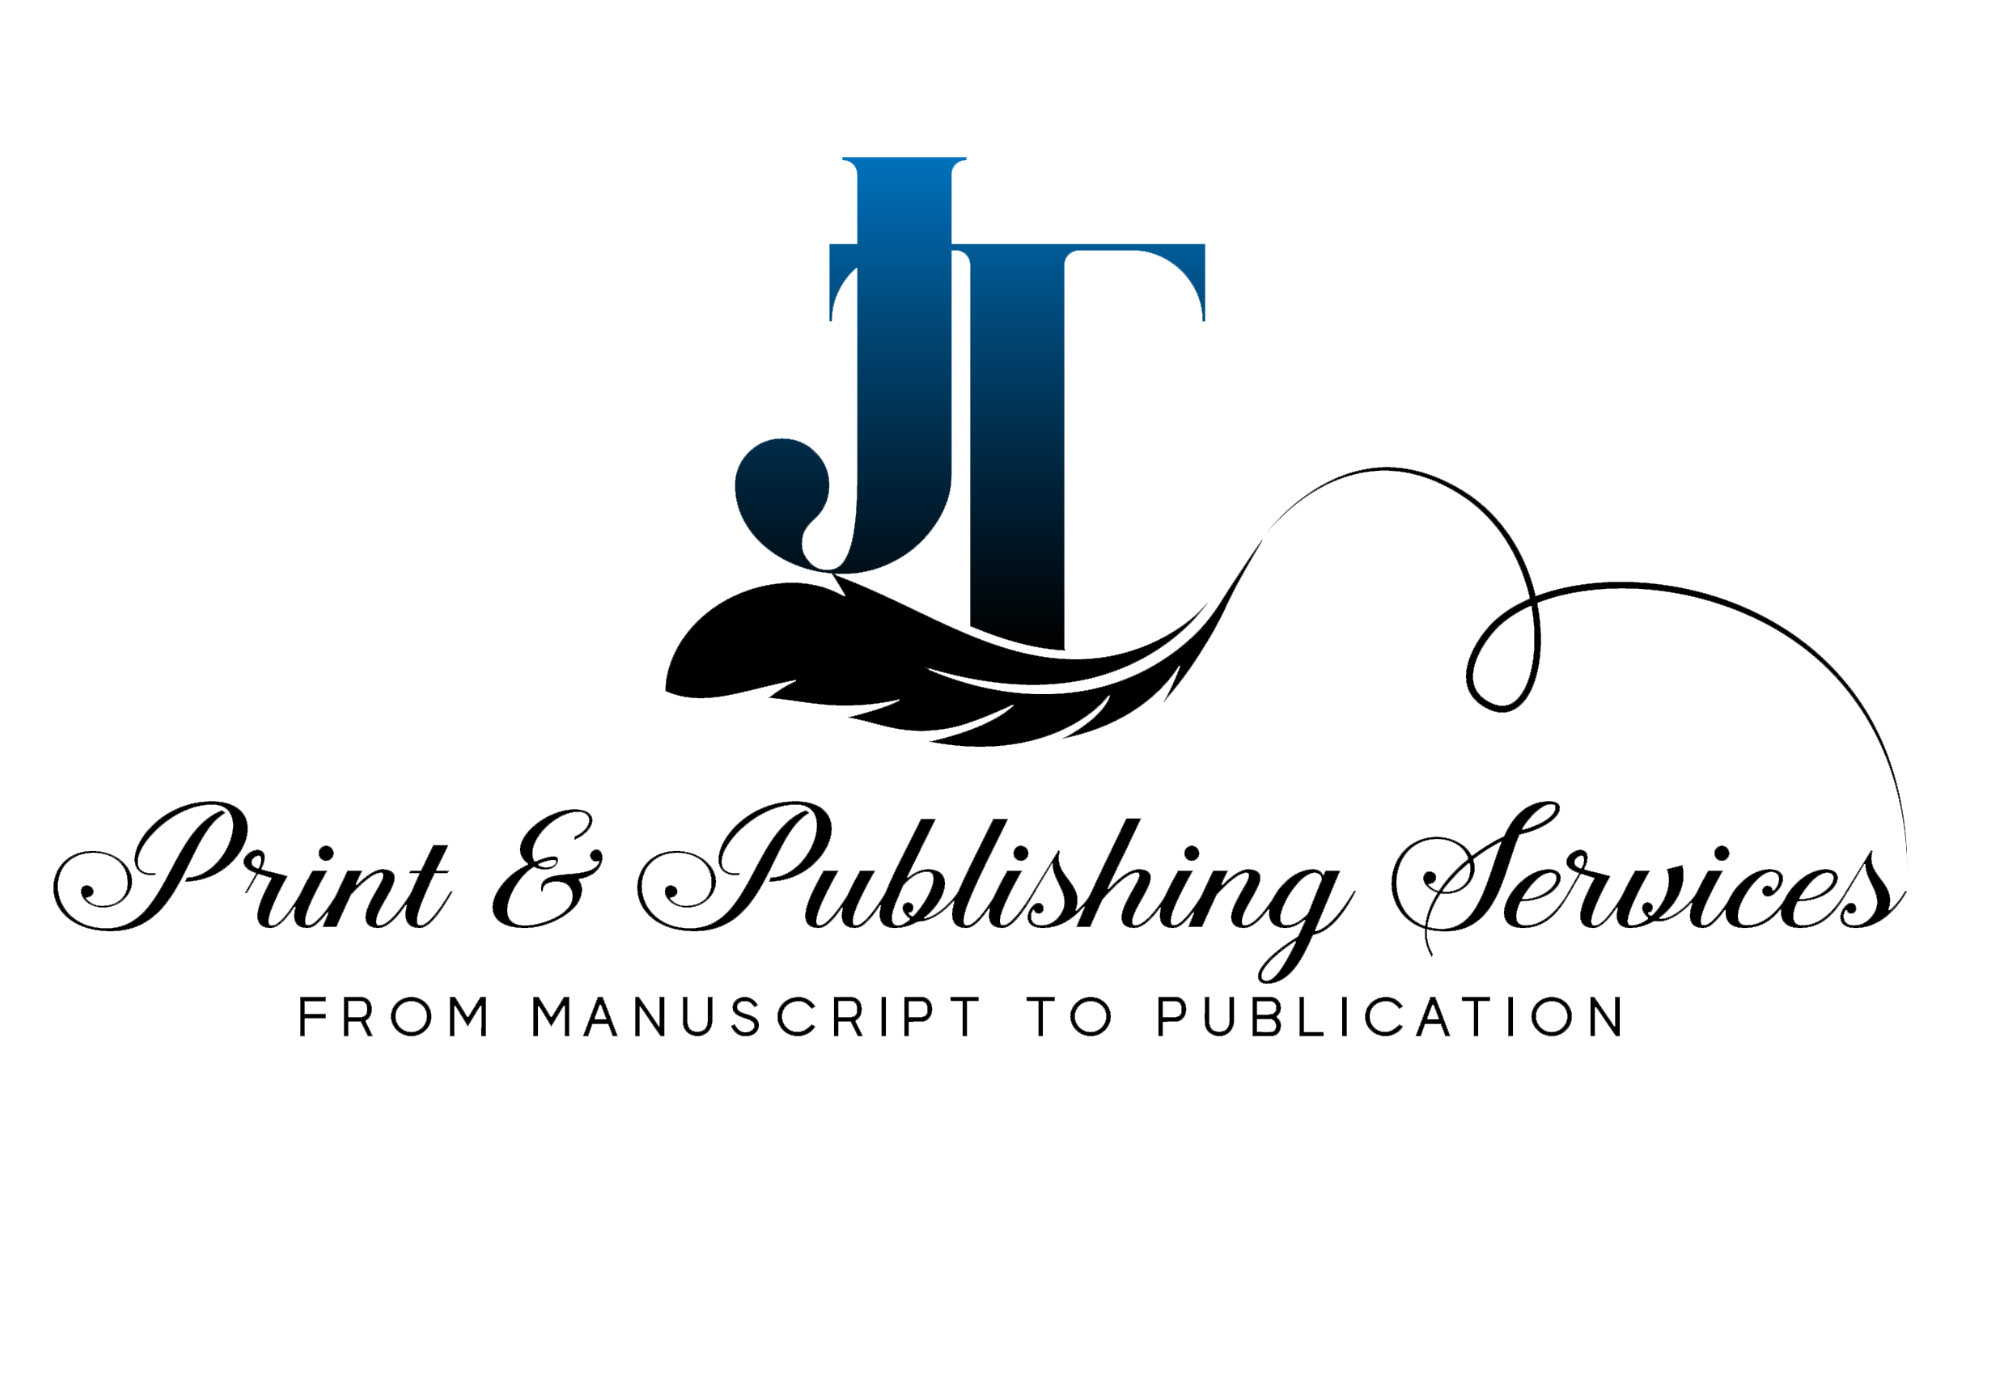 J T Print and Publishing Services, LLC